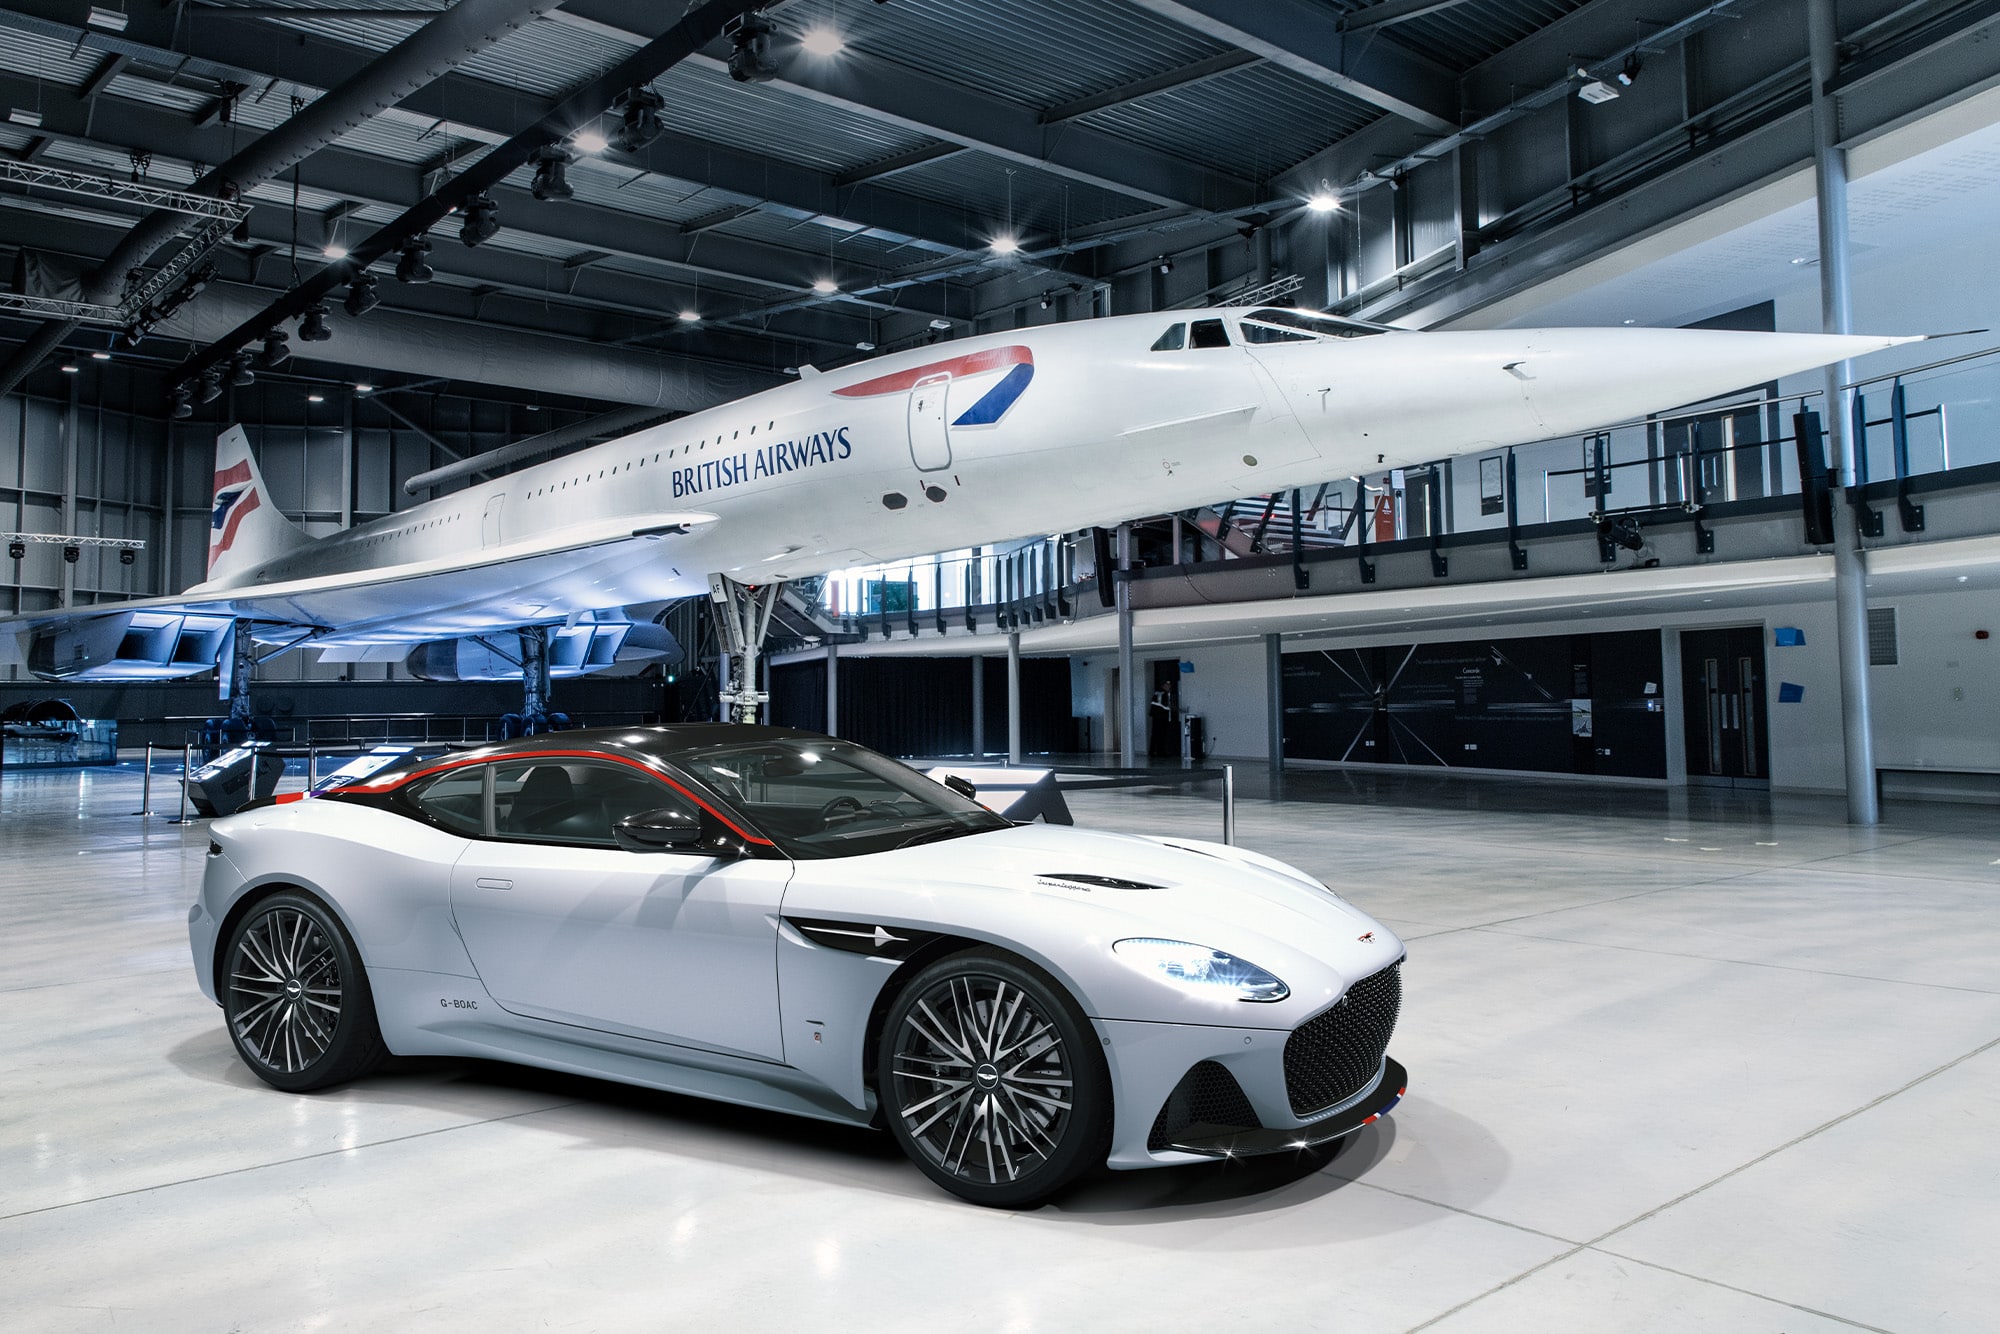 Aston Martin DBS Superleggera Concorde edition